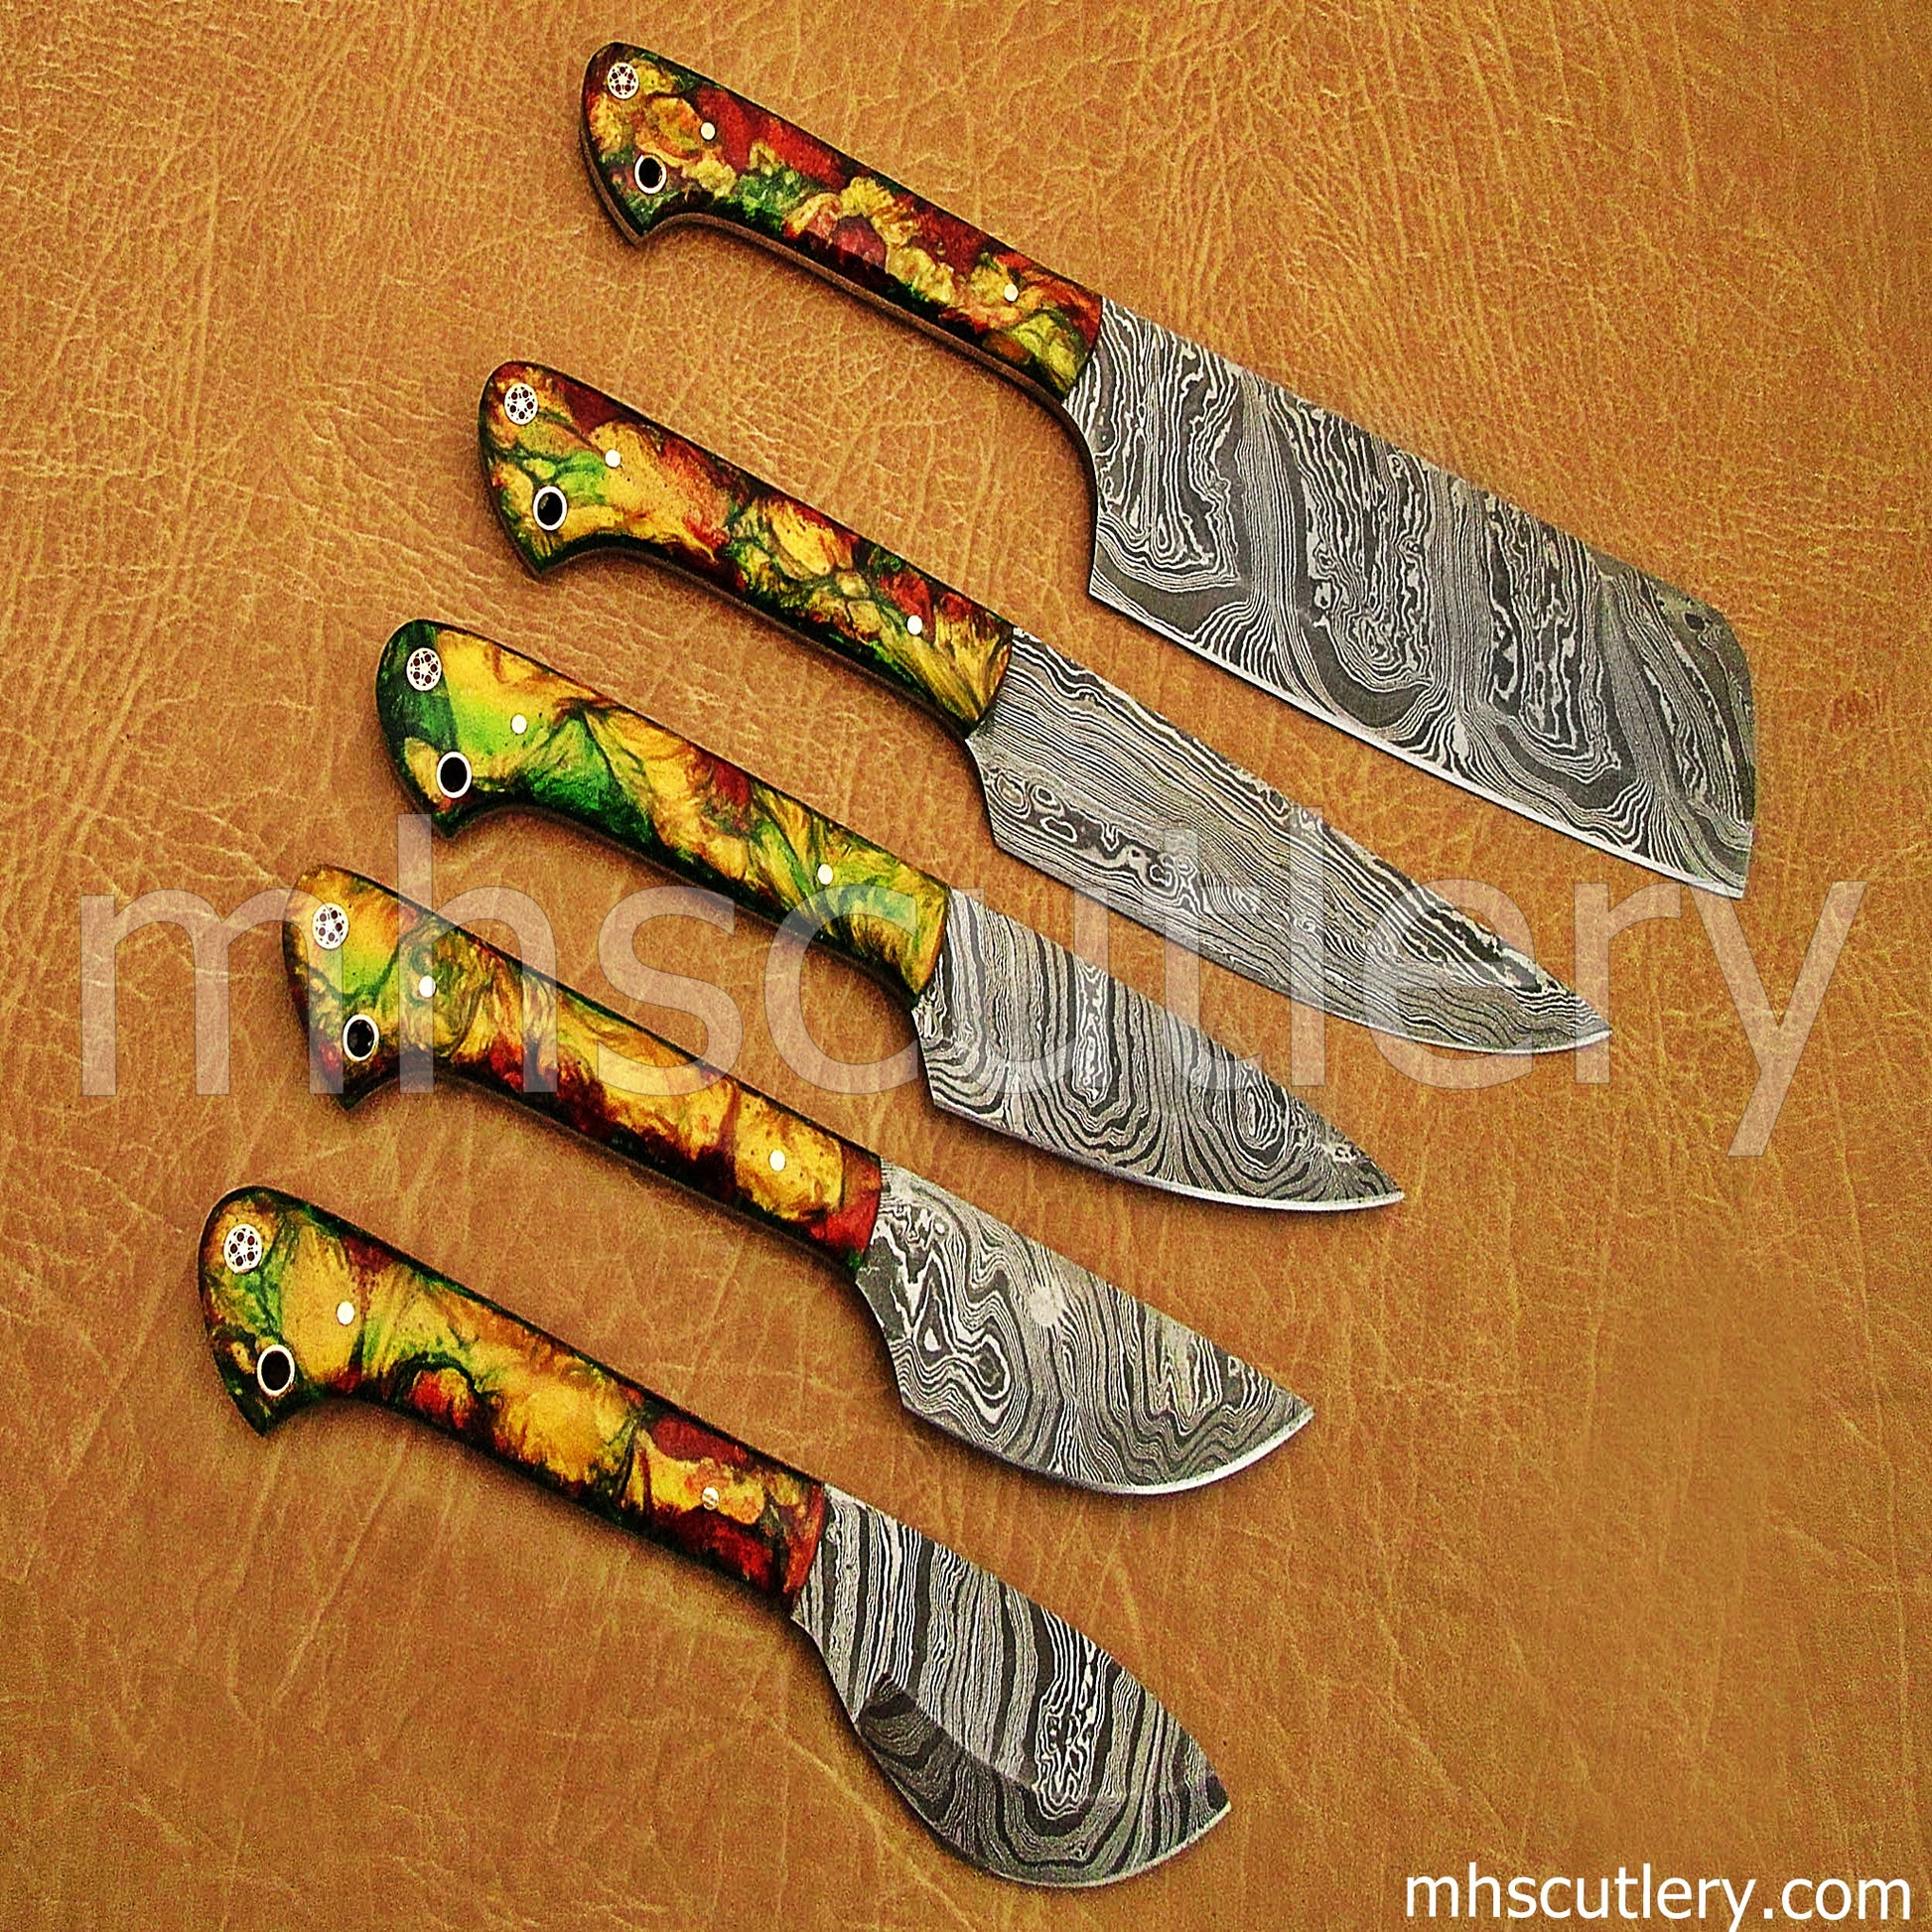 Handmade Damascus Steel Kitchen Knife Set / 5 Pcs | mhscutlery